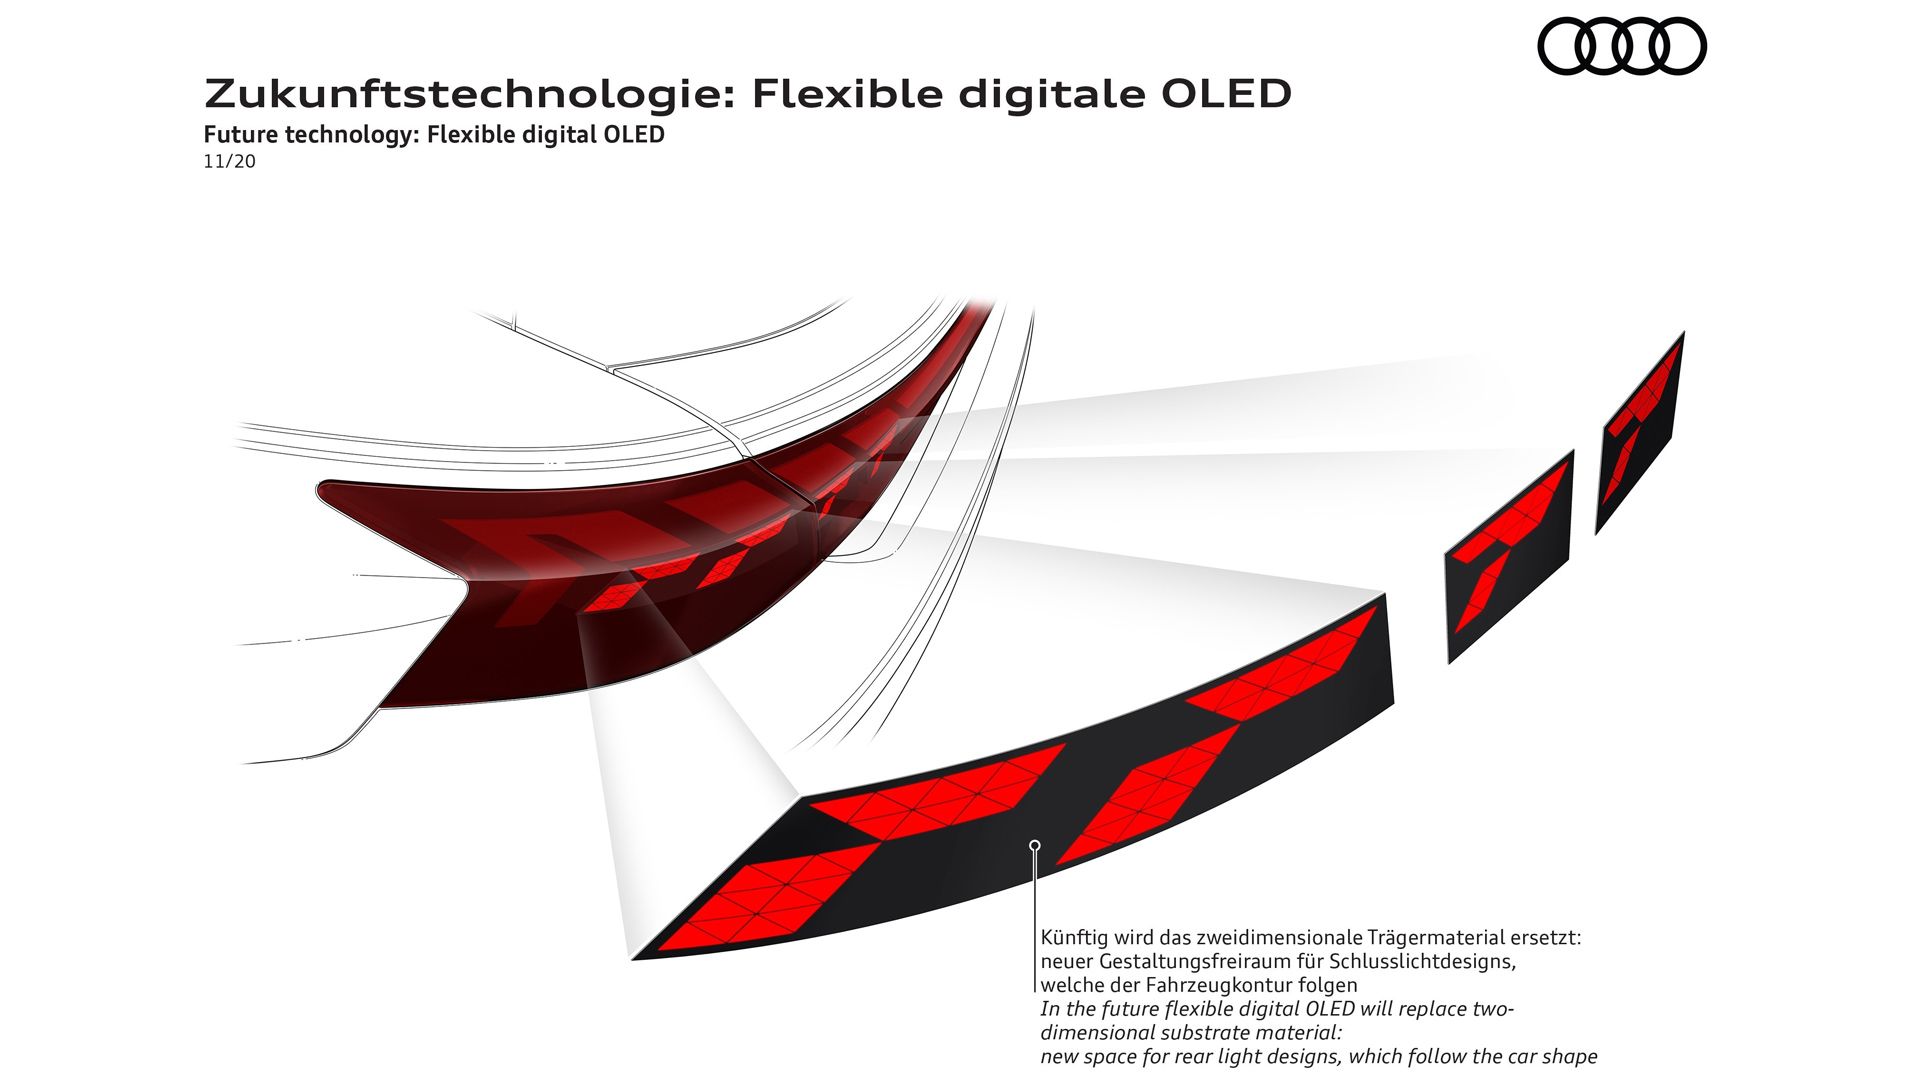 A future technology: Flexible digital OLEDs